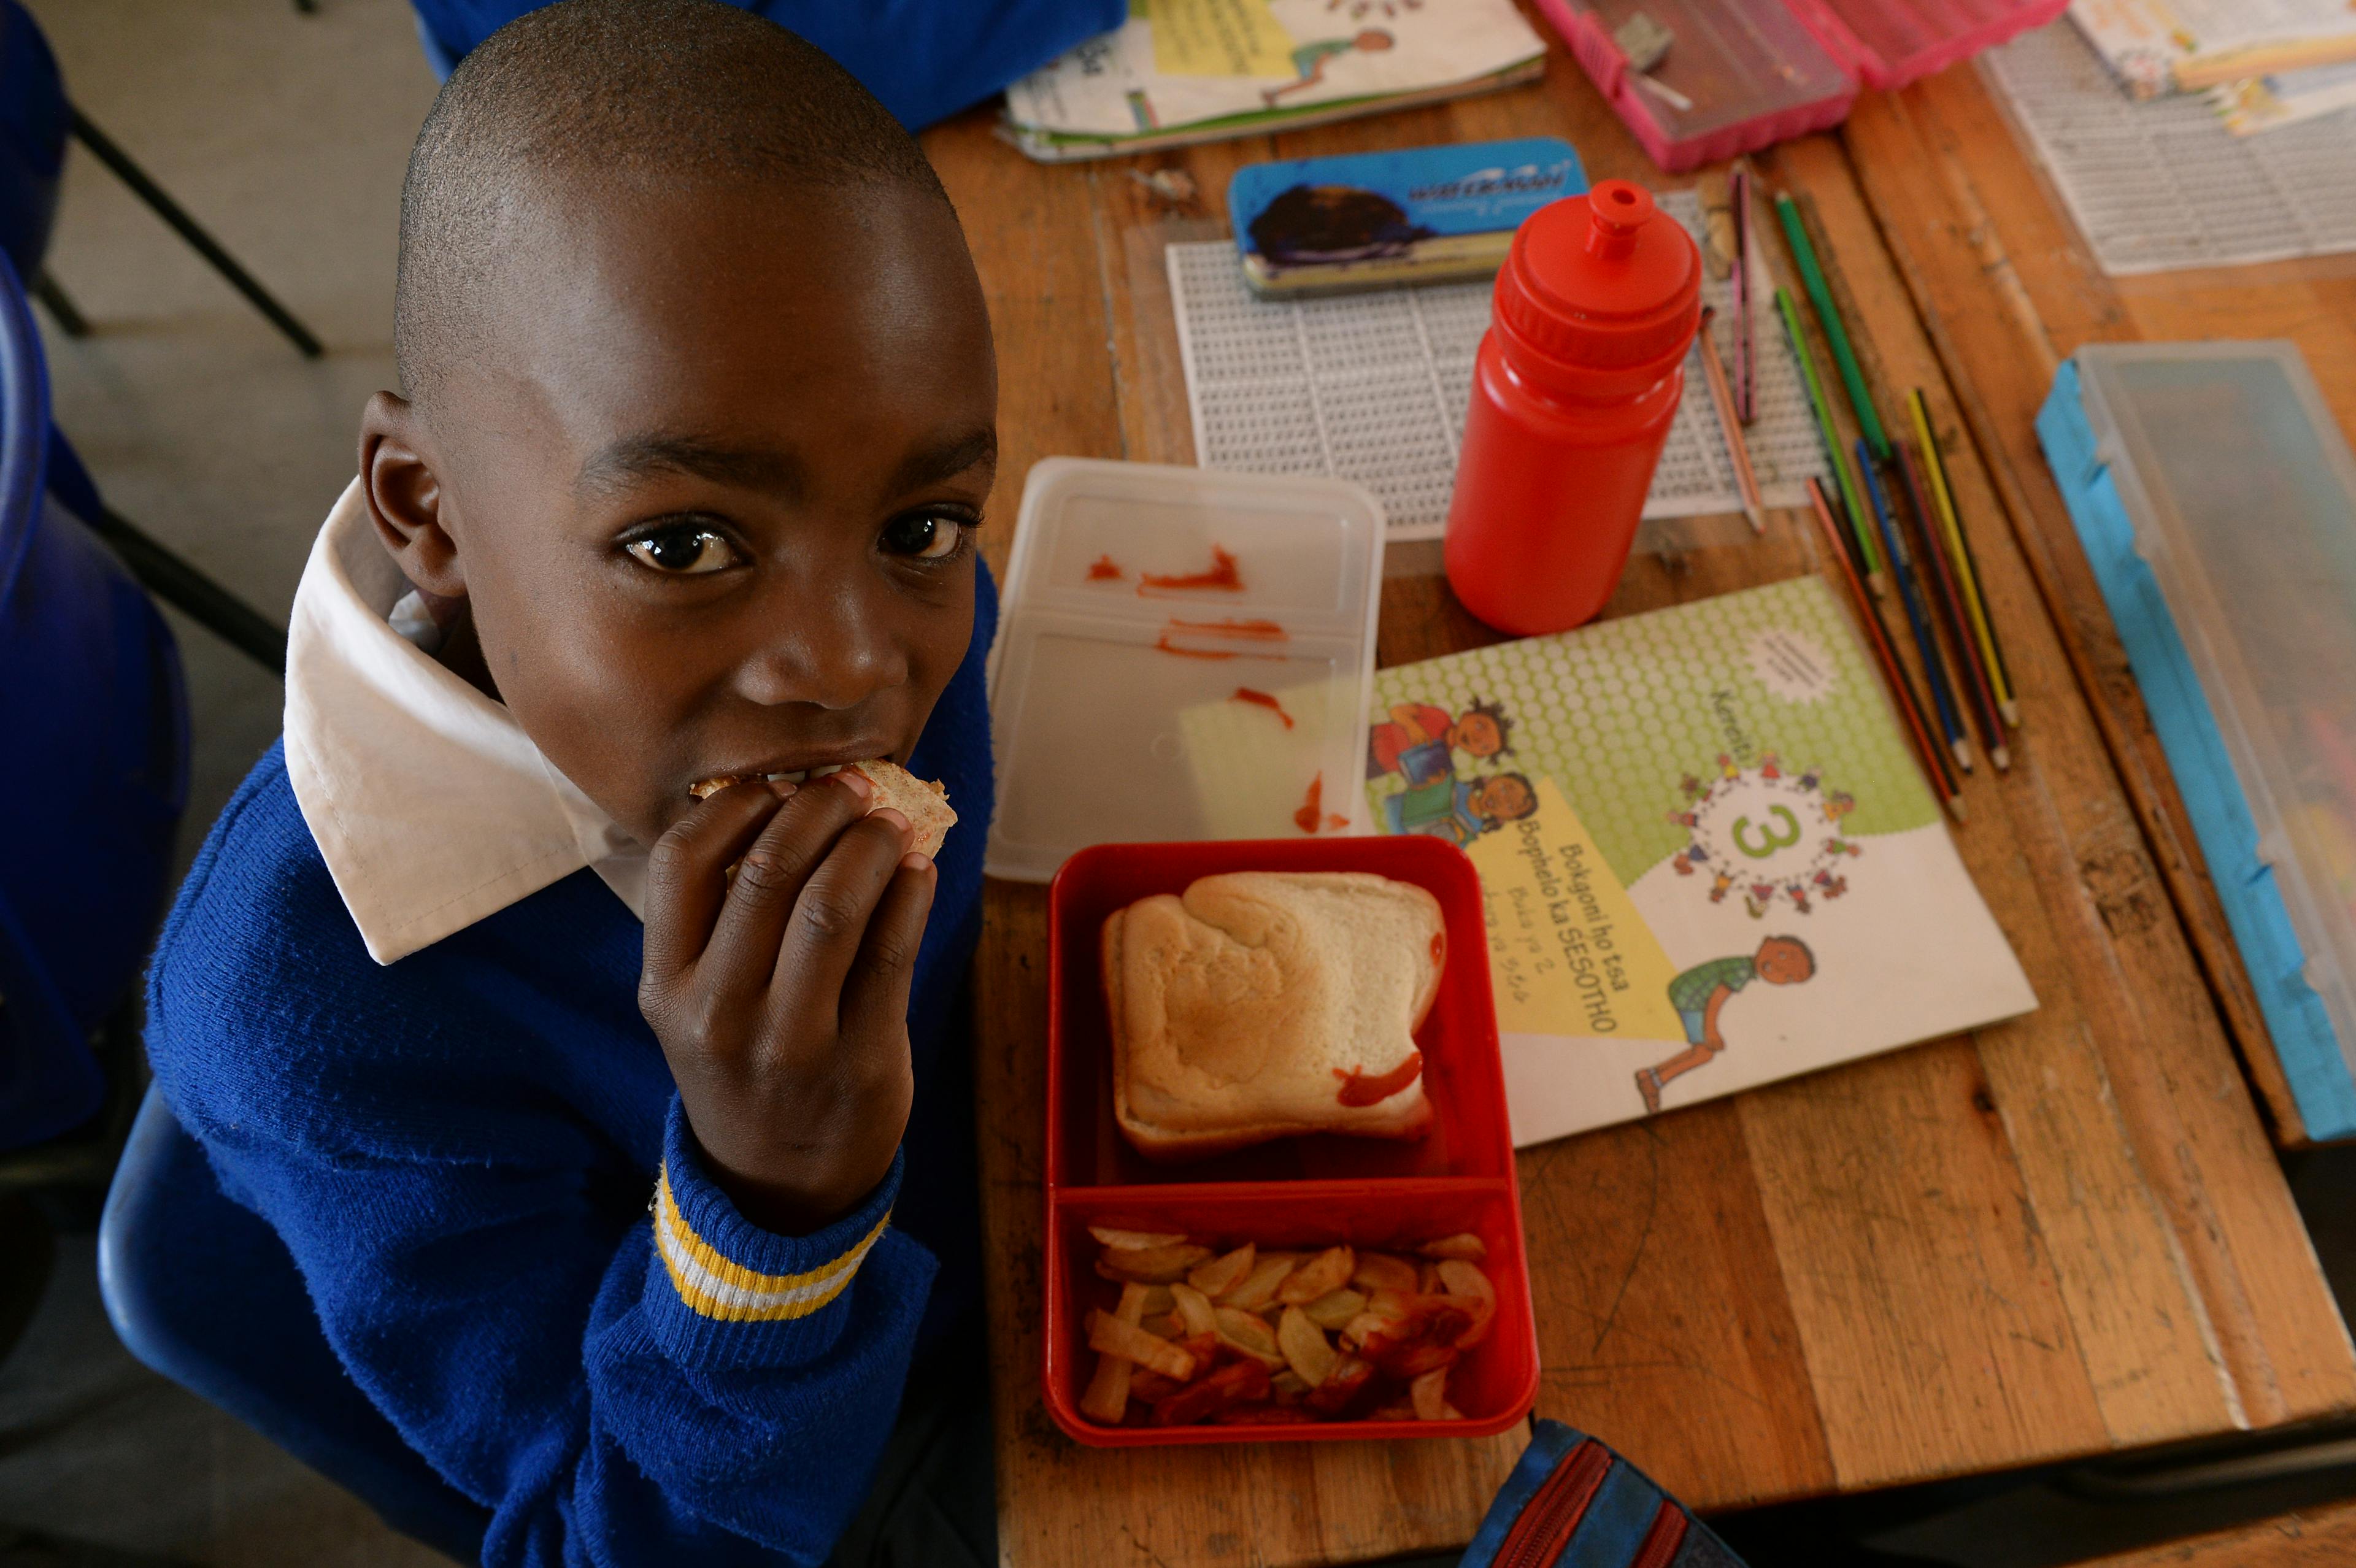 A school boy eats a sandwich from his lunch box